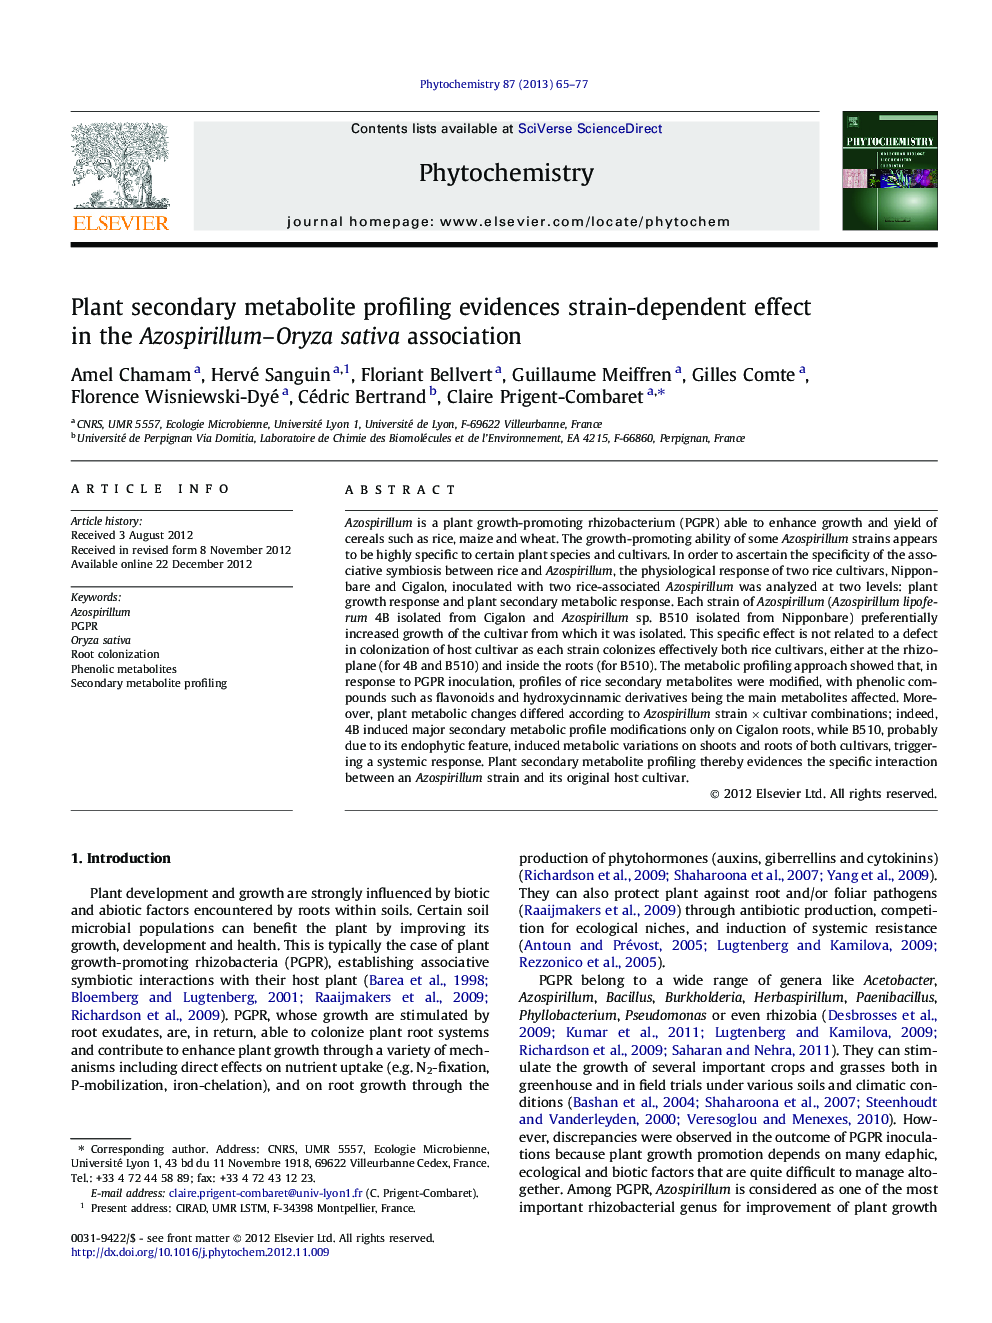 Plant secondary metabolite profiling evidences strain-dependent effect in the Azospirillum-Oryza sativa association